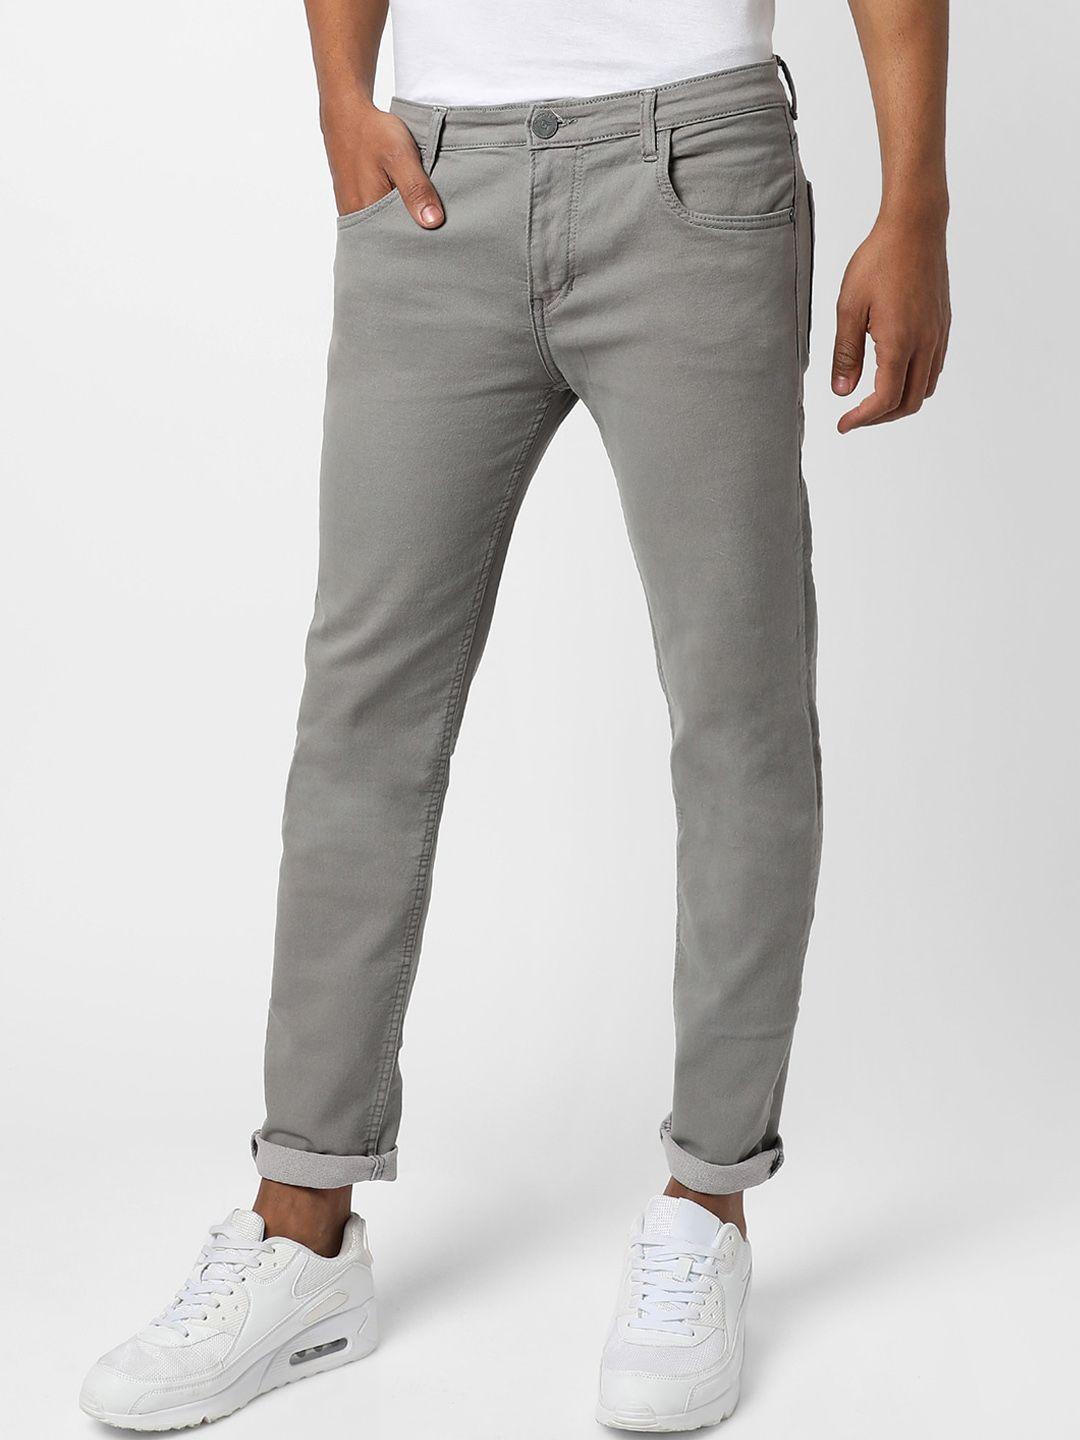 campus sutra men grey smart slim fit stretchable jeans